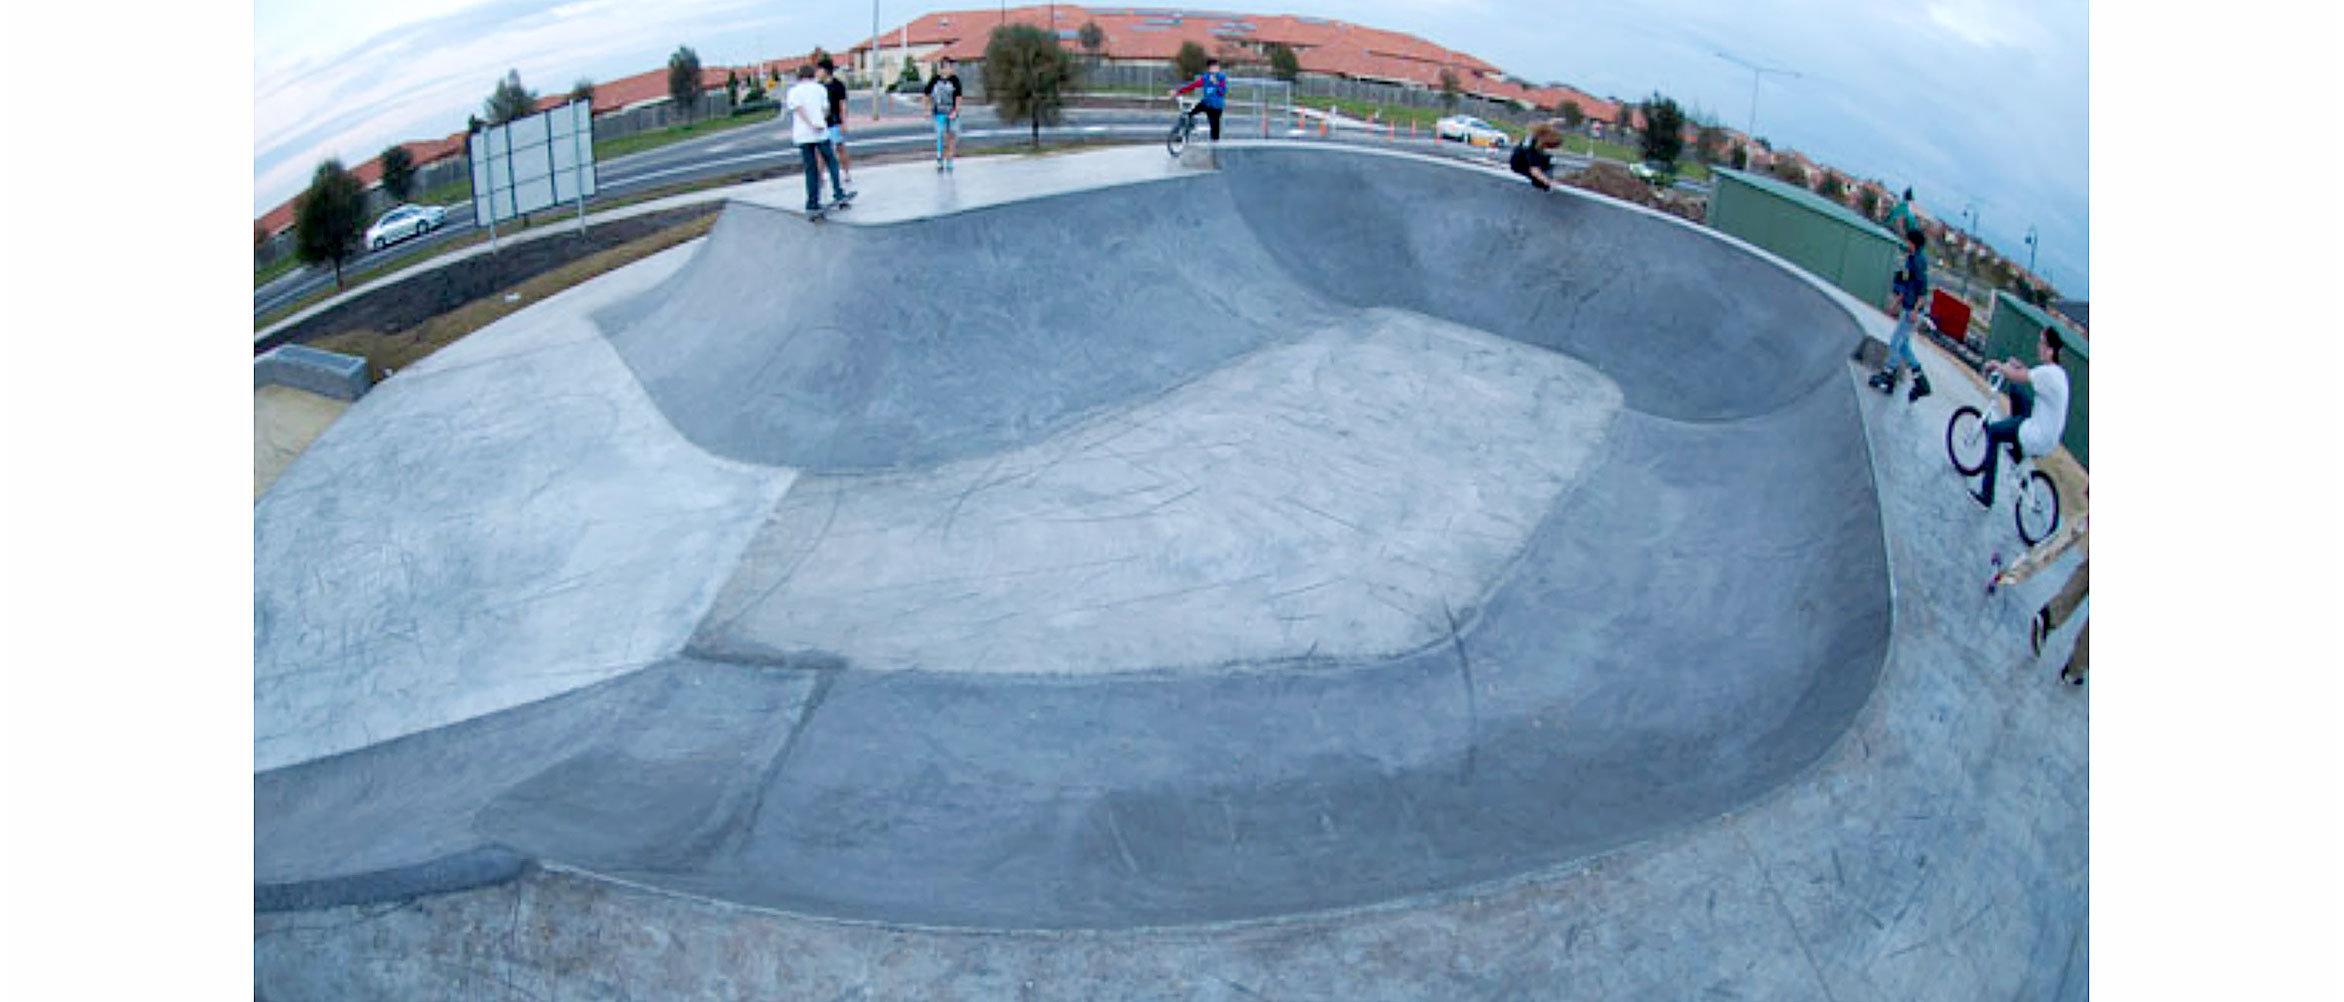 Taylors Hill skate bowl, Concrete Skateparks